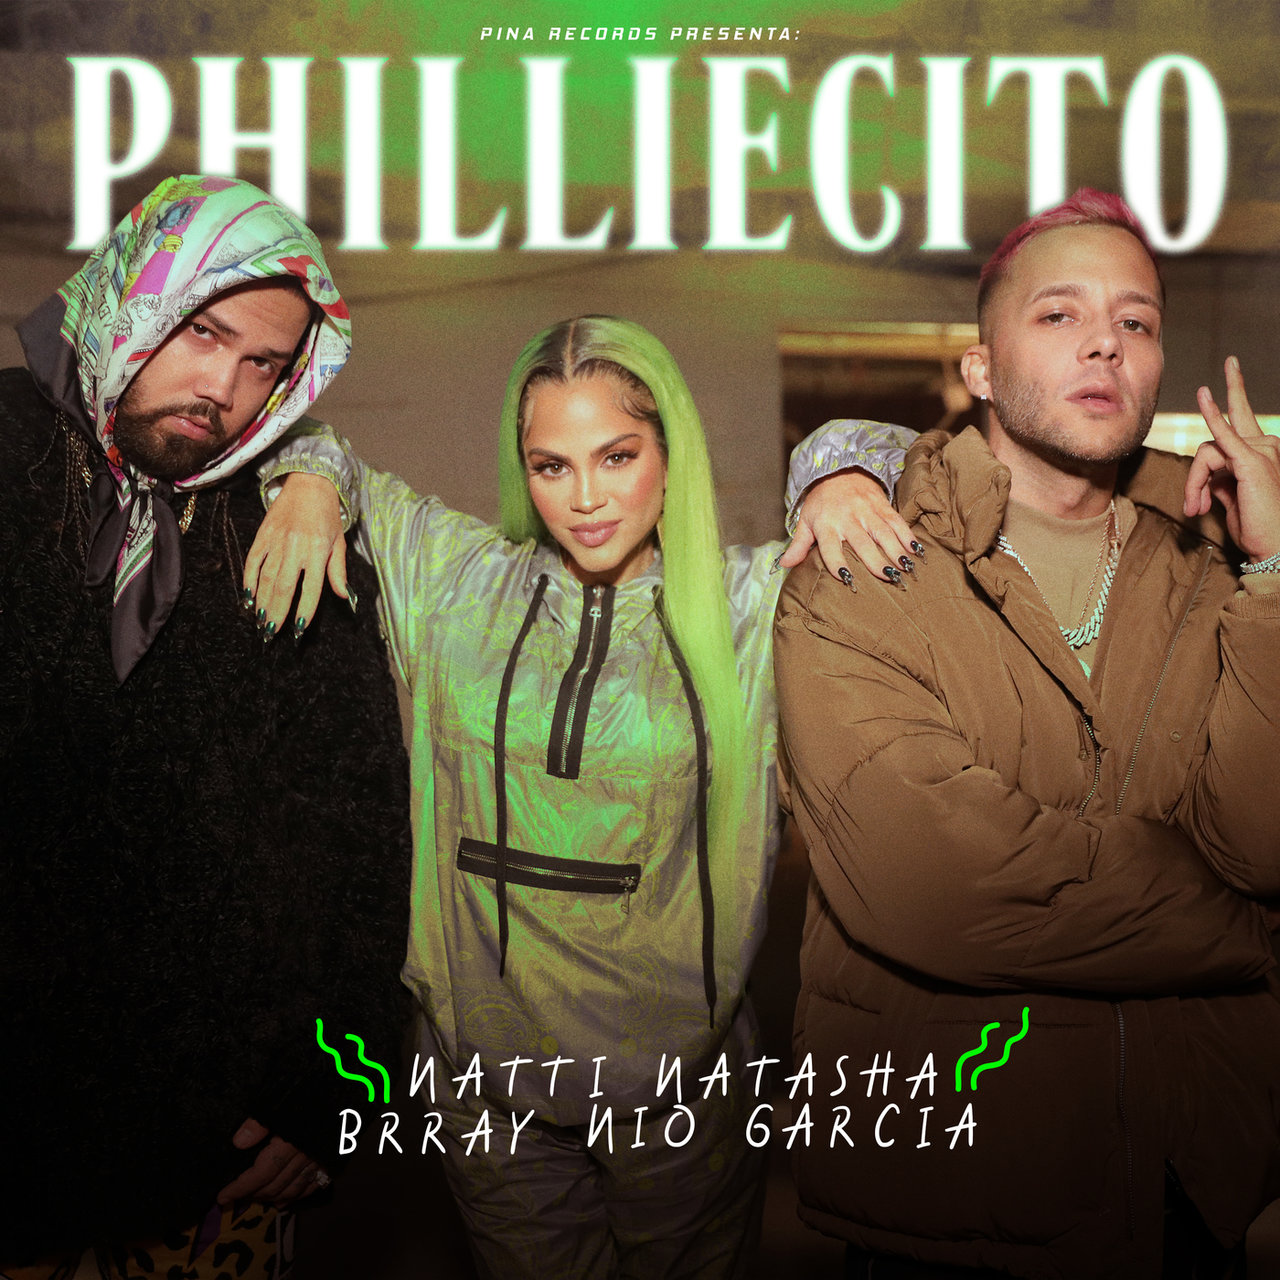 Natti Natasha - Philliecito (ft. Nio Garcia and Brray) (Cover)